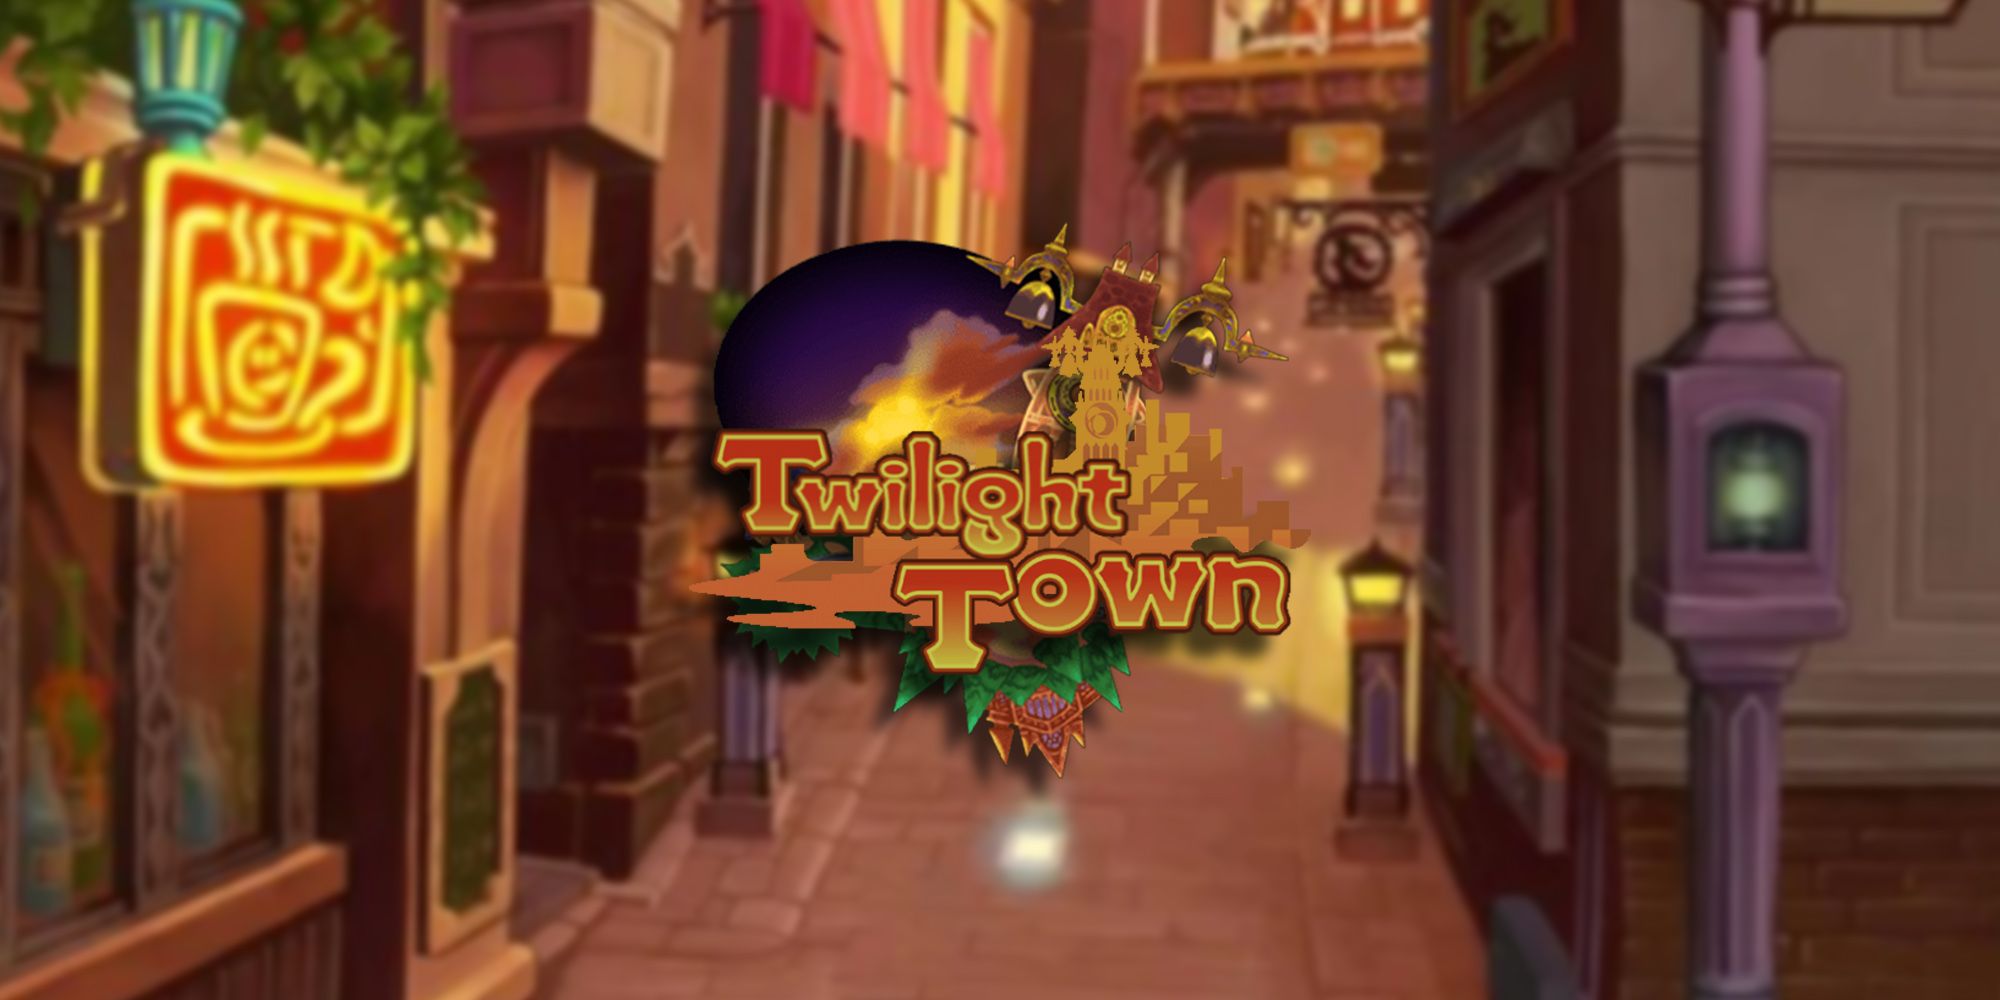 Twilight Town in Kingdom Hearts 2